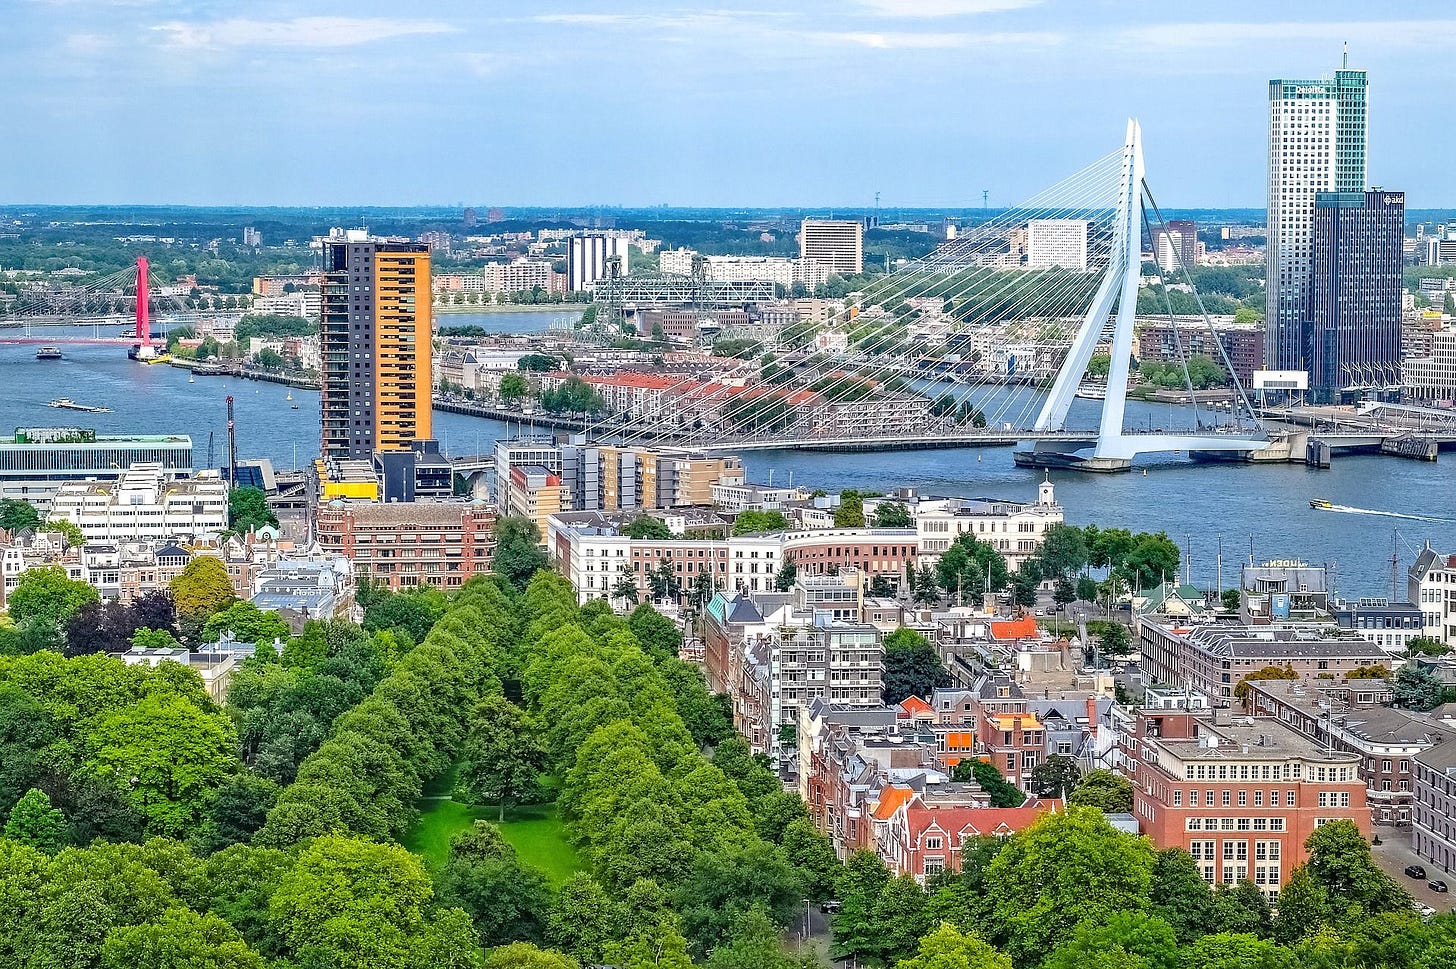 The city of Rotterdam